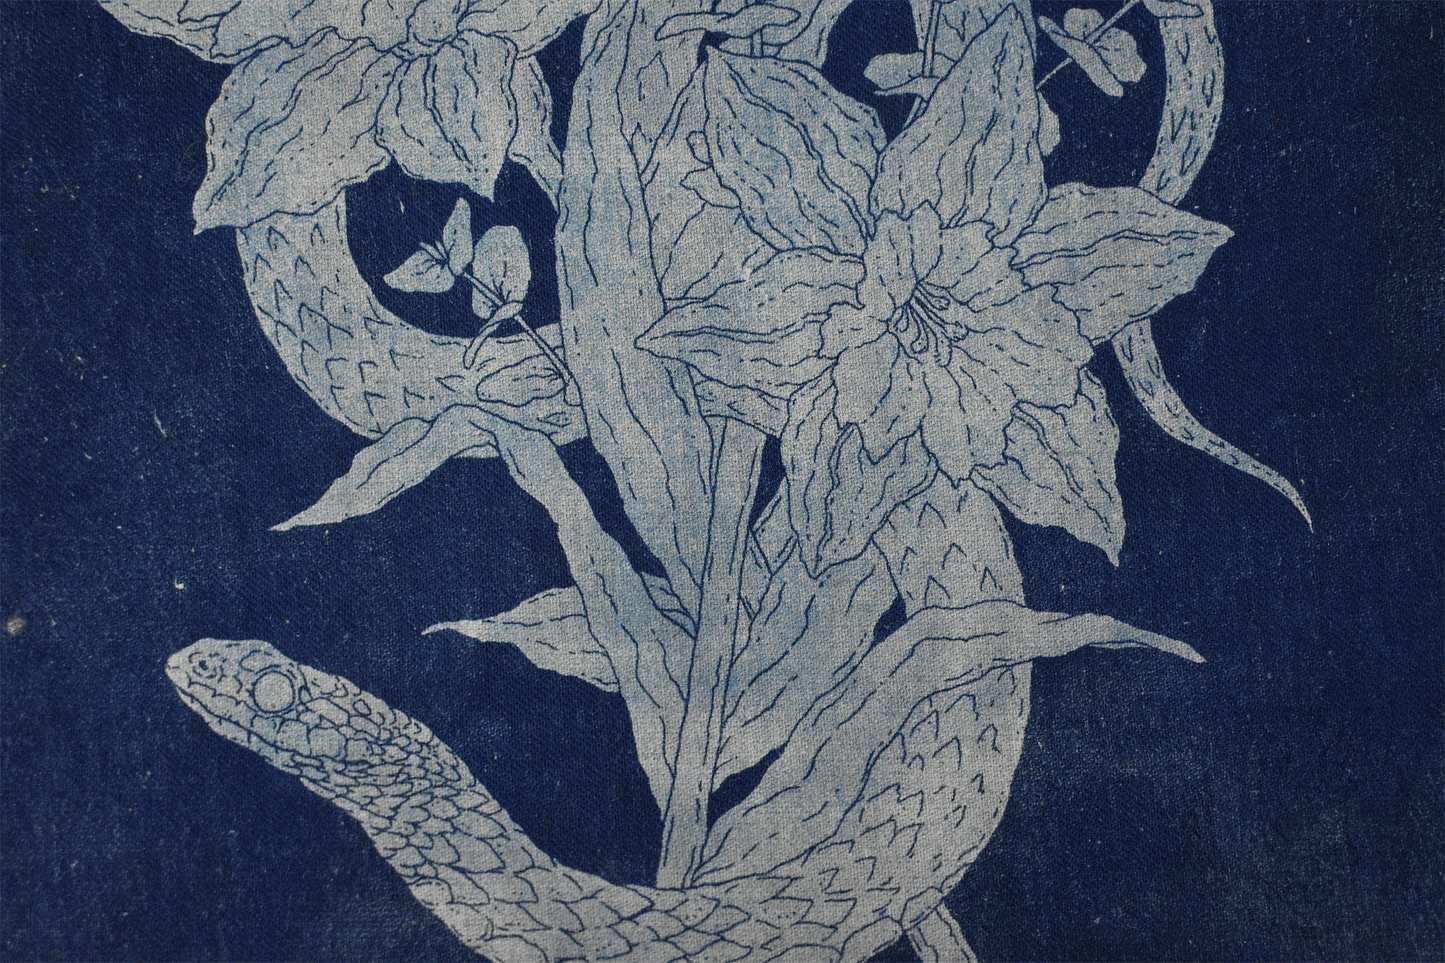 Original-Tethered-Fabric-Cyanotype-Sun_Print-Artwork-Snake-Flowers